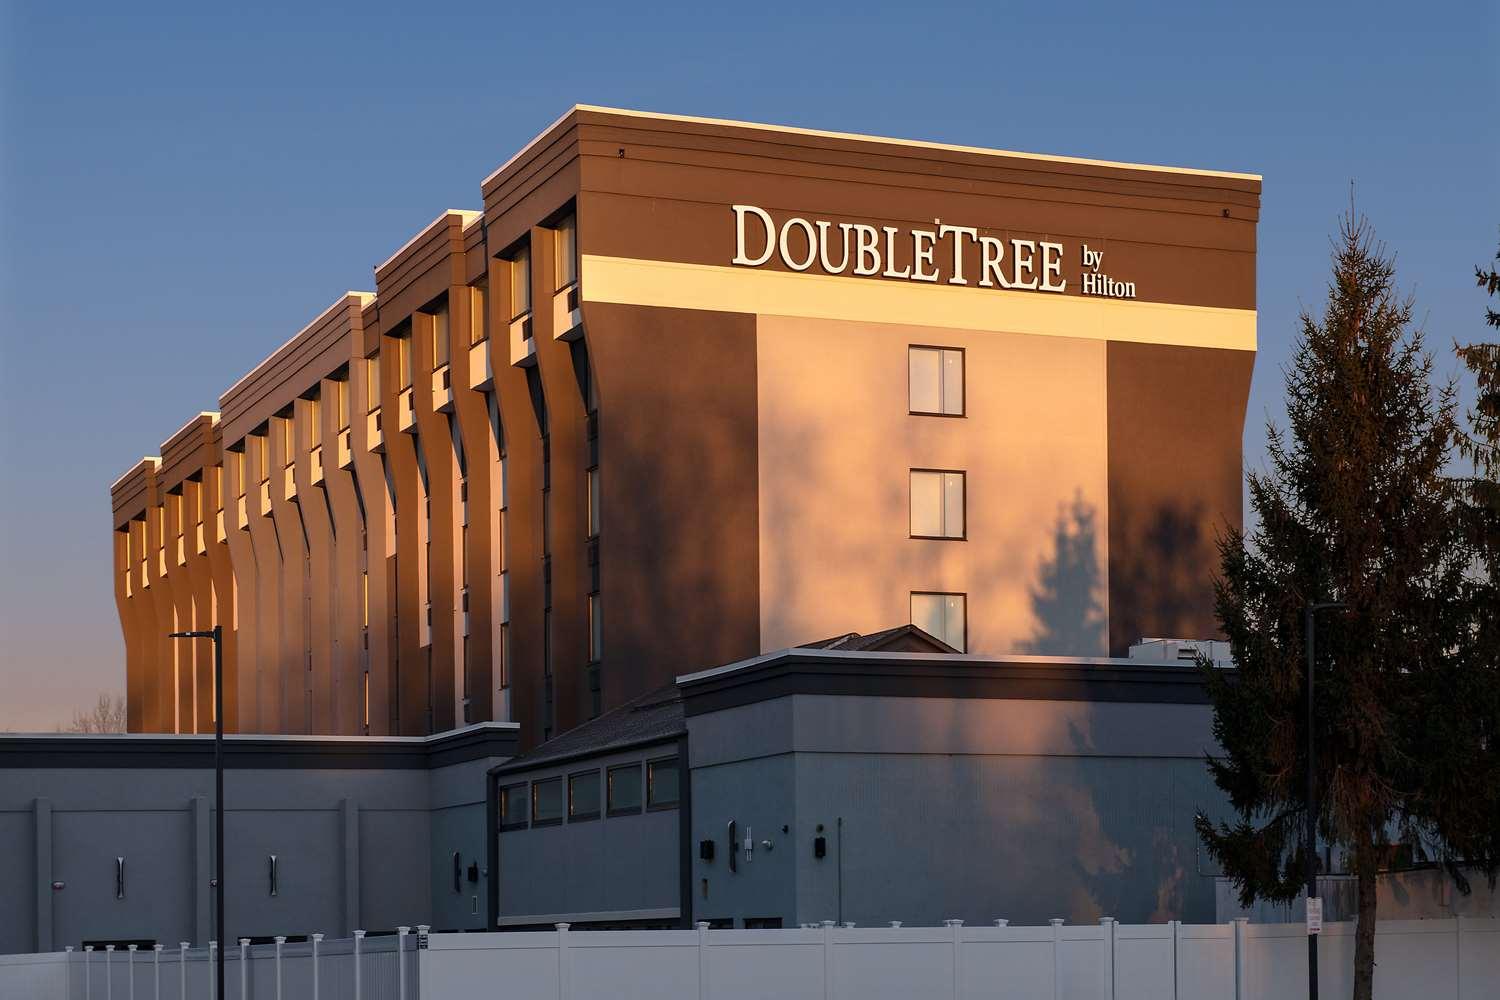 DoubleTree by Hilton Monroe Township Cranbury in Monroe, NJ